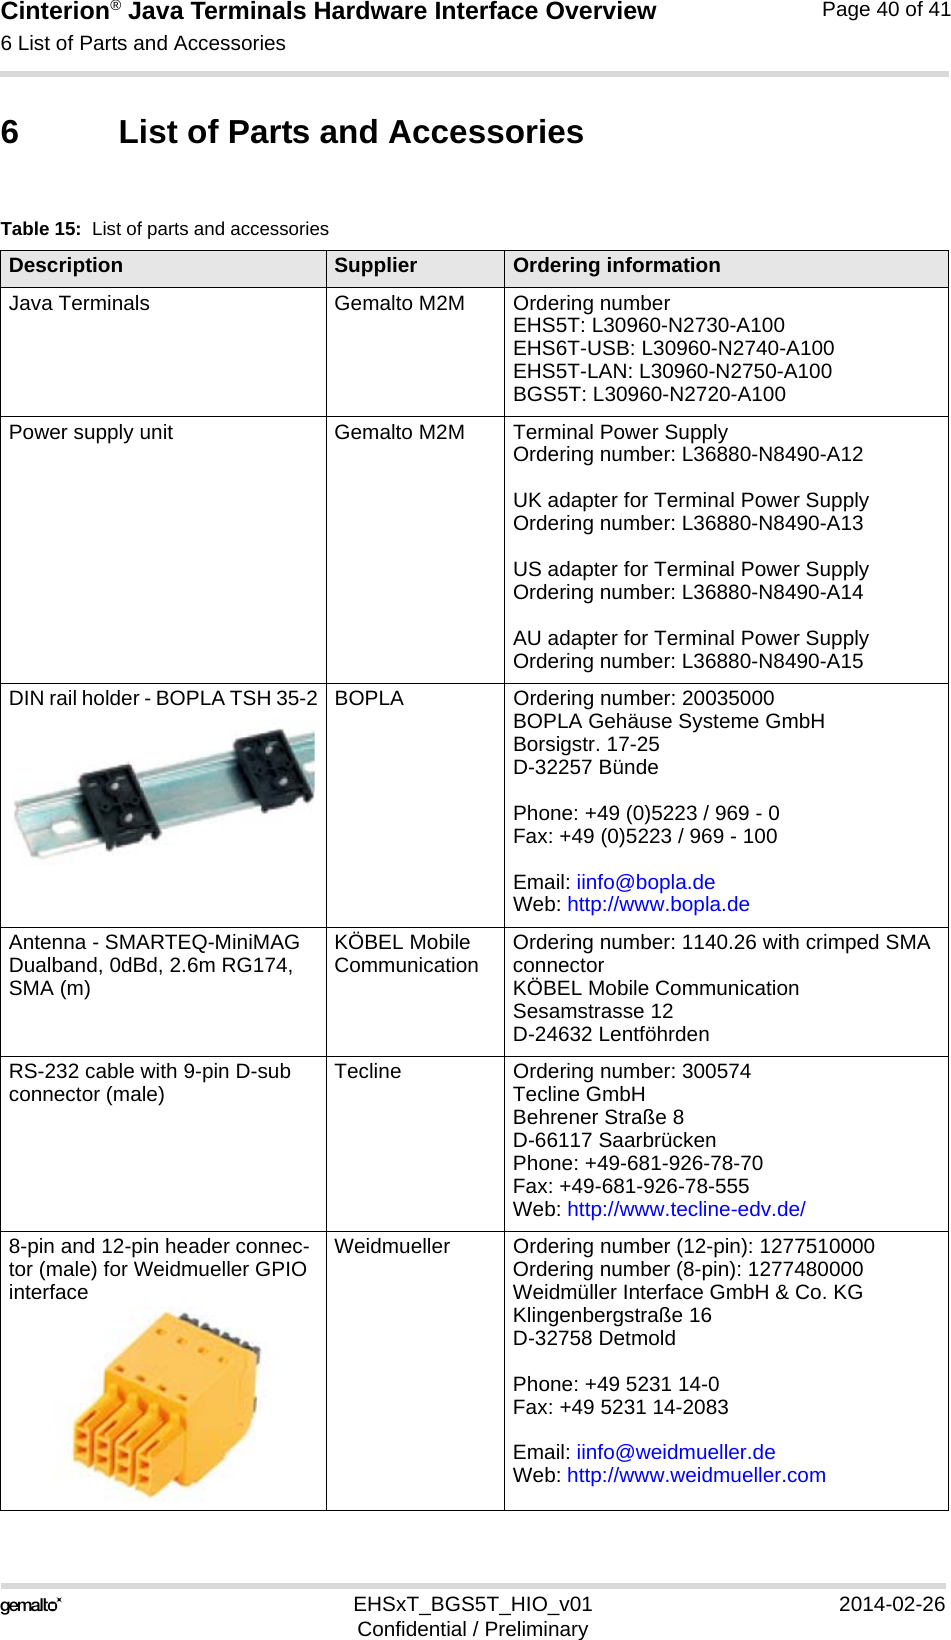 Cinterion® Java Terminals Hardware Interface Overview6 List of Parts and Accessories40EHSxT_BGS5T_HIO_v01 2014-02-26Confidential / PreliminaryPage 40 of 416 List of Parts and AccessoriesTable 15:  List of parts and accessoriesDescription Supplier Ordering informationJava Terminals  Gemalto M2M Ordering numberEHS5T: L30960-N2730-A100EHS6T-USB: L30960-N2740-A100EHS5T-LAN: L30960-N2750-A100BGS5T: L30960-N2720-A100Power supply unit  Gemalto M2M Terminal Power SupplyOrdering number: L36880-N8490-A12UK adapter for Terminal Power SupplyOrdering number: L36880-N8490-A13US adapter for Terminal Power SupplyOrdering number: L36880-N8490-A14AU adapter for Terminal Power SupplyOrdering number: L36880-N8490-A15DIN rail holder - BOPLA TSH 35-2 BOPLA Ordering number: 20035000BOPLA Gehäuse Systeme GmbHBorsigstr. 17-25D-32257 BündePhone: +49 (0)5223 / 969 - 0Fax: +49 (0)5223 / 969 - 100Email: iinfo@bopla.deWeb: http://www.bopla.deAntenna - SMARTEQ-MiniMAG Dualband, 0dBd, 2.6m RG174, SMA (m)KÖBEL Mobile Communication Ordering number: 1140.26 with crimped SMA connectorKÖBEL Mobile CommunicationSesamstrasse 12D-24632 LentföhrdenRS-232 cable with 9-pin D-sub connector (male) Tecline Ordering number: 300574Tecline GmbHBehrener Straße 8D-66117 SaarbrückenPhone: +49-681-926-78-70Fax: +49-681-926-78-555Web: http://www.tecline-edv.de/8-pin and 12-pin header connec-tor (male) for Weidmueller GPIO interfaceWeidmueller Ordering number (12-pin): 1277510000Ordering number (8-pin): 1277480000Weidmüller Interface GmbH &amp; Co. KGKlingenbergstraße 16D-32758 DetmoldPhone: +49 5231 14-0Fax: +49 5231 14-2083 Email: iinfo@weidmueller.deWeb: http://www.weidmueller.com